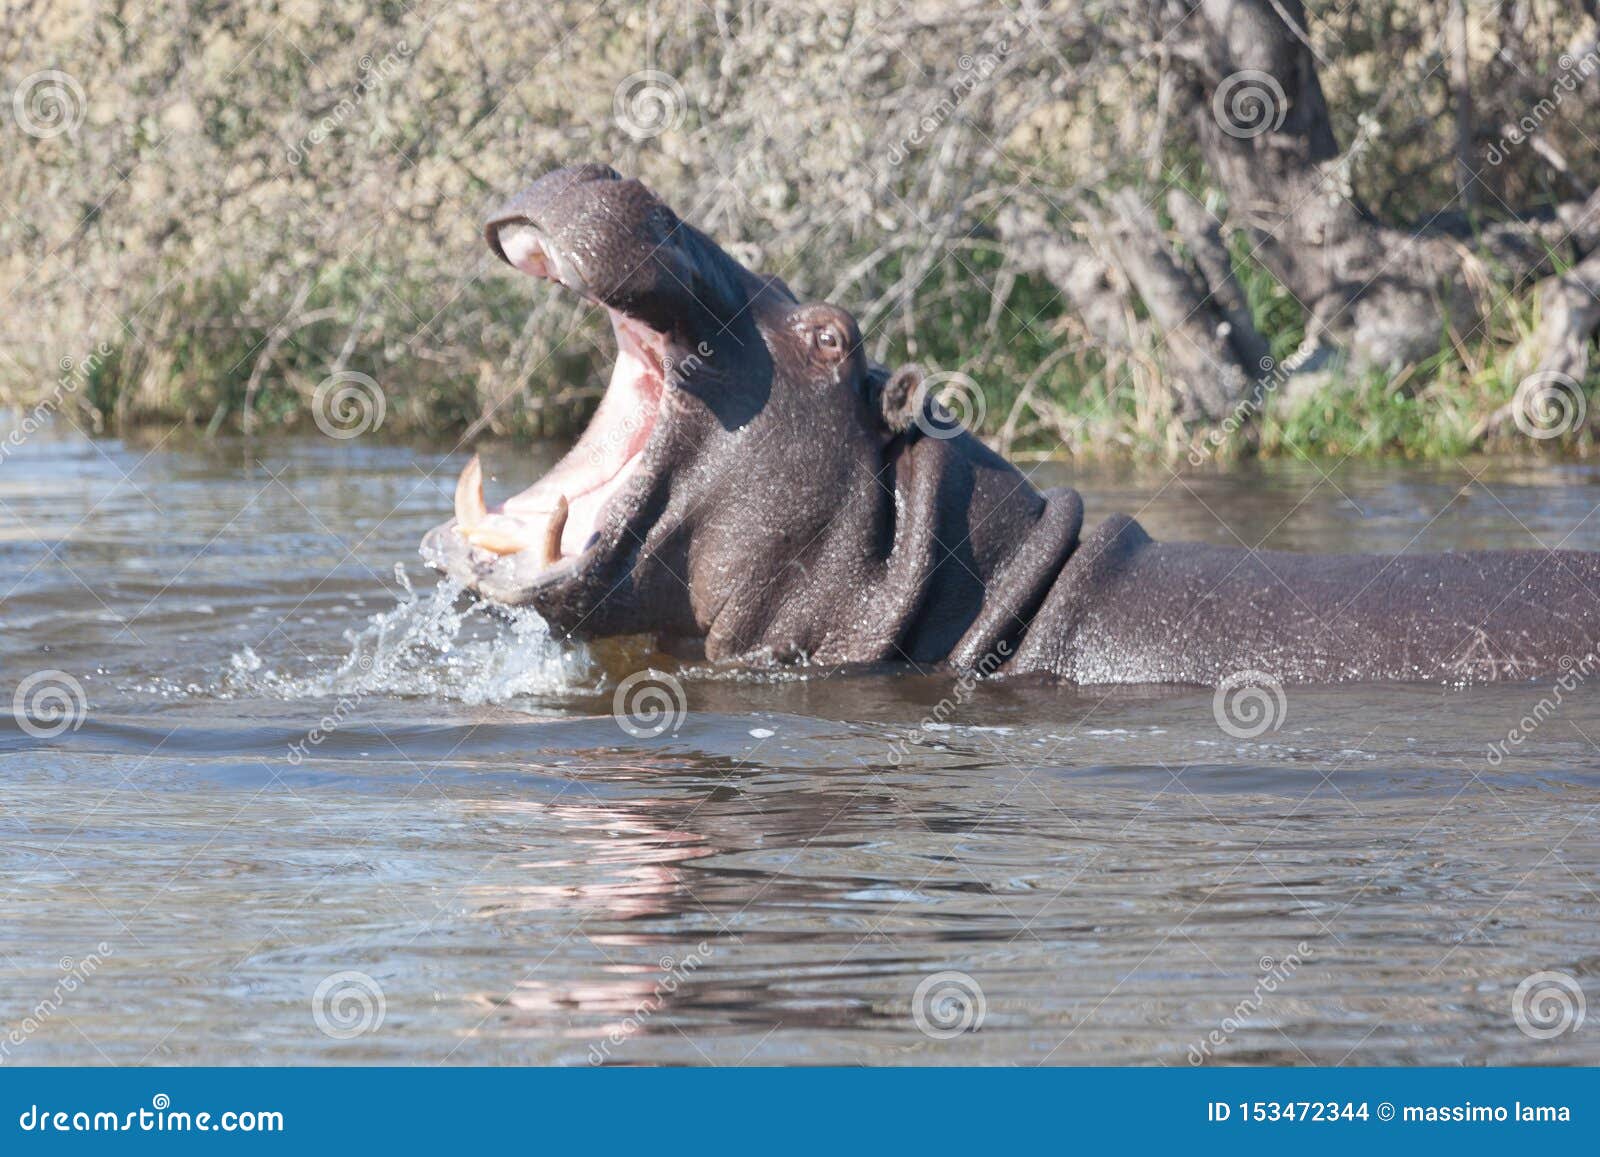 Hyppo in Botswana stock photo. Image of mammal, lake - 153472344